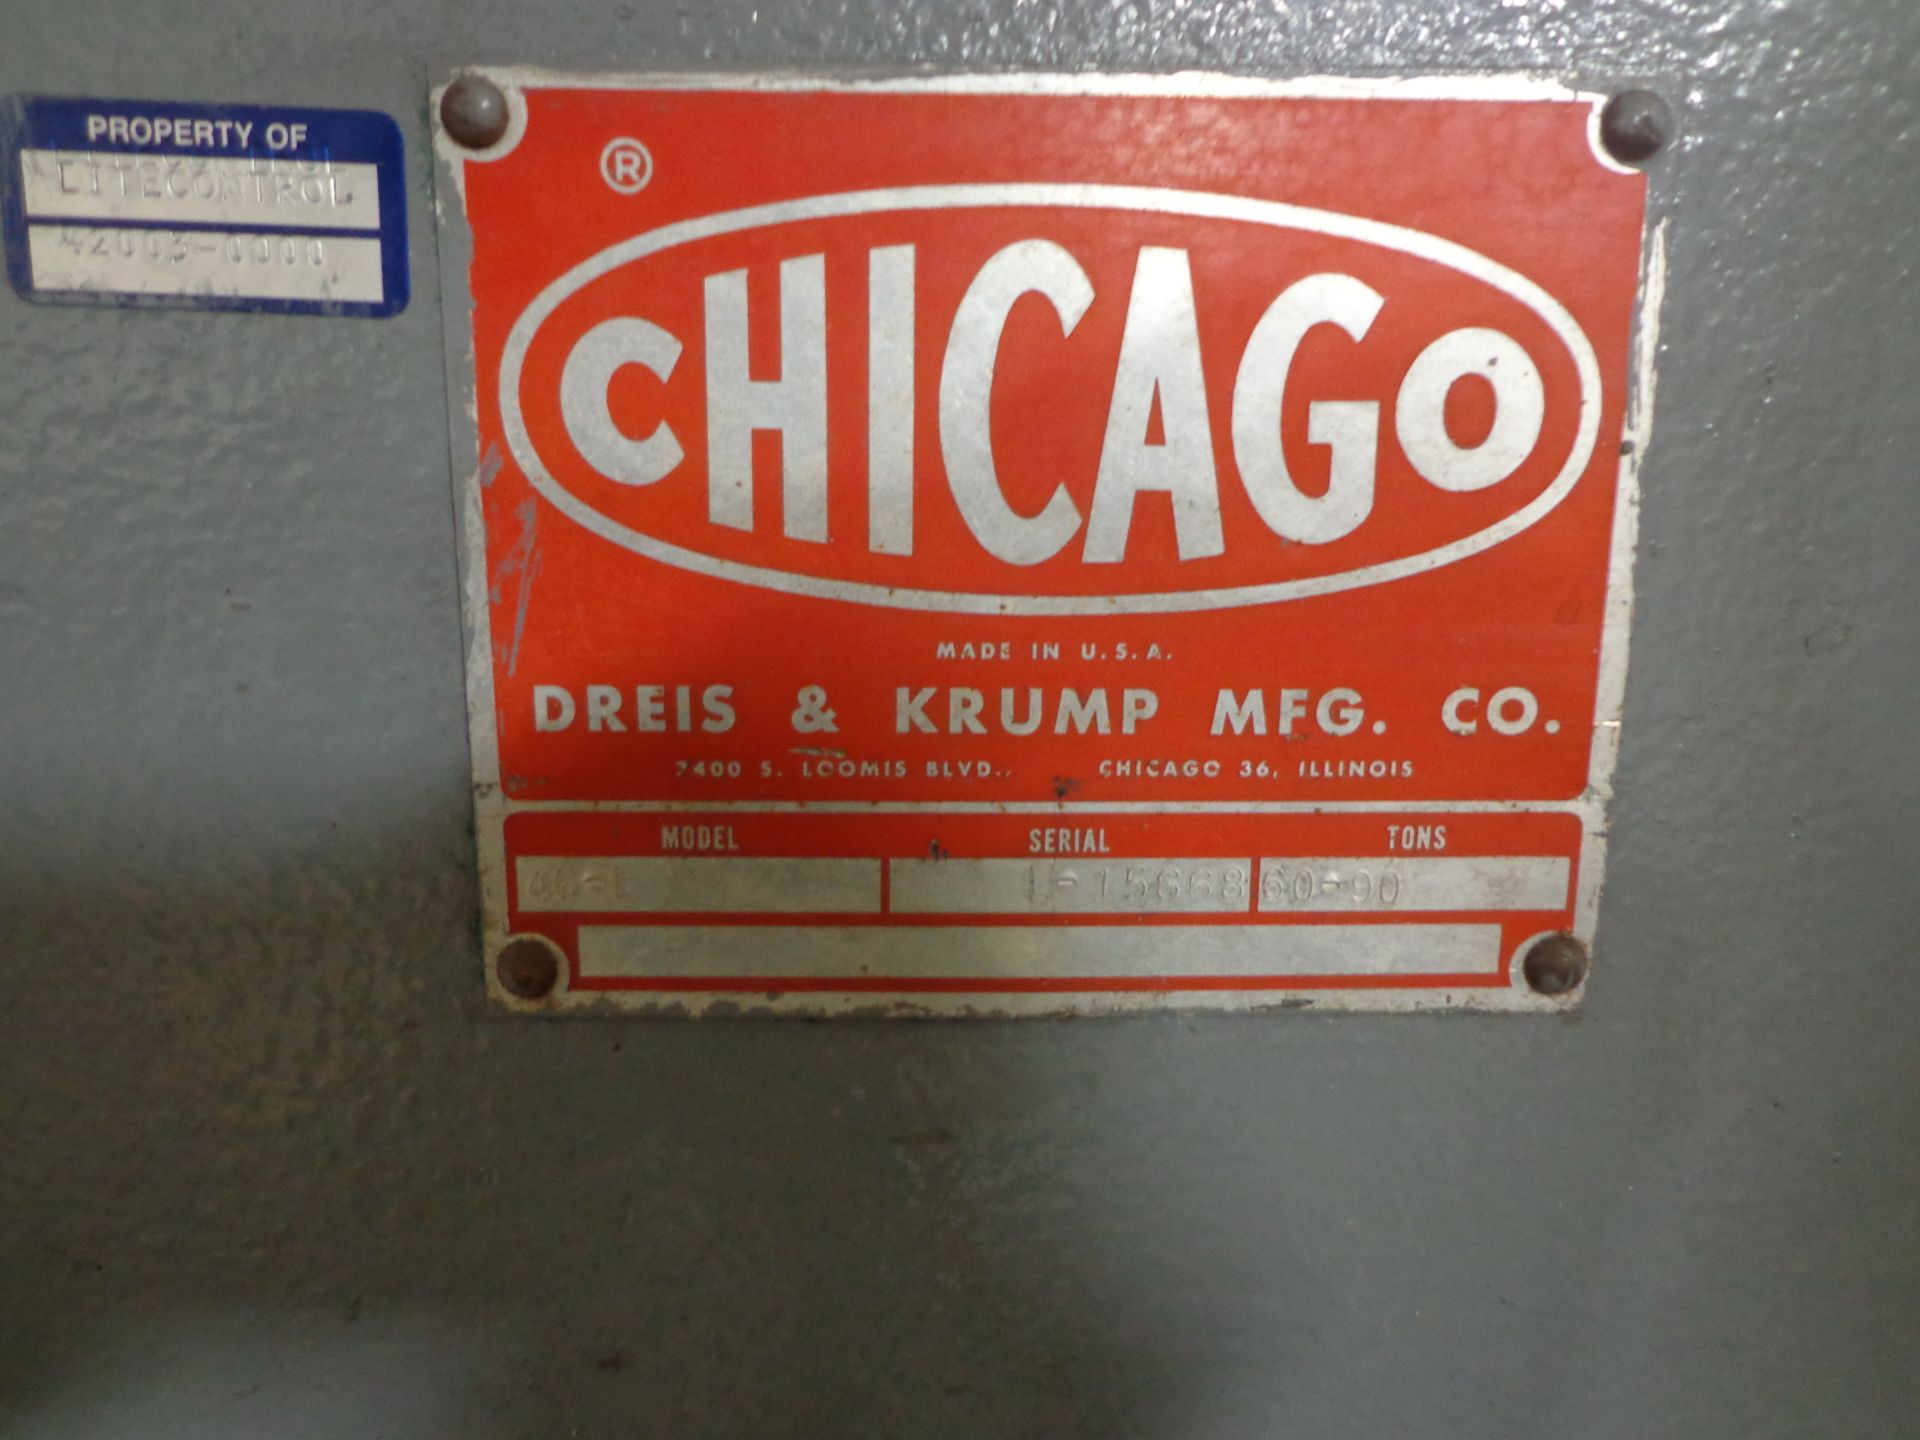 CHICAGO DREIS & KRUMP MODEL 46L 6' PRESS BRAKE, 60 - 90 TON CAPACITY, FOOT PEDAL CONTROL, 54" - Image 6 of 8